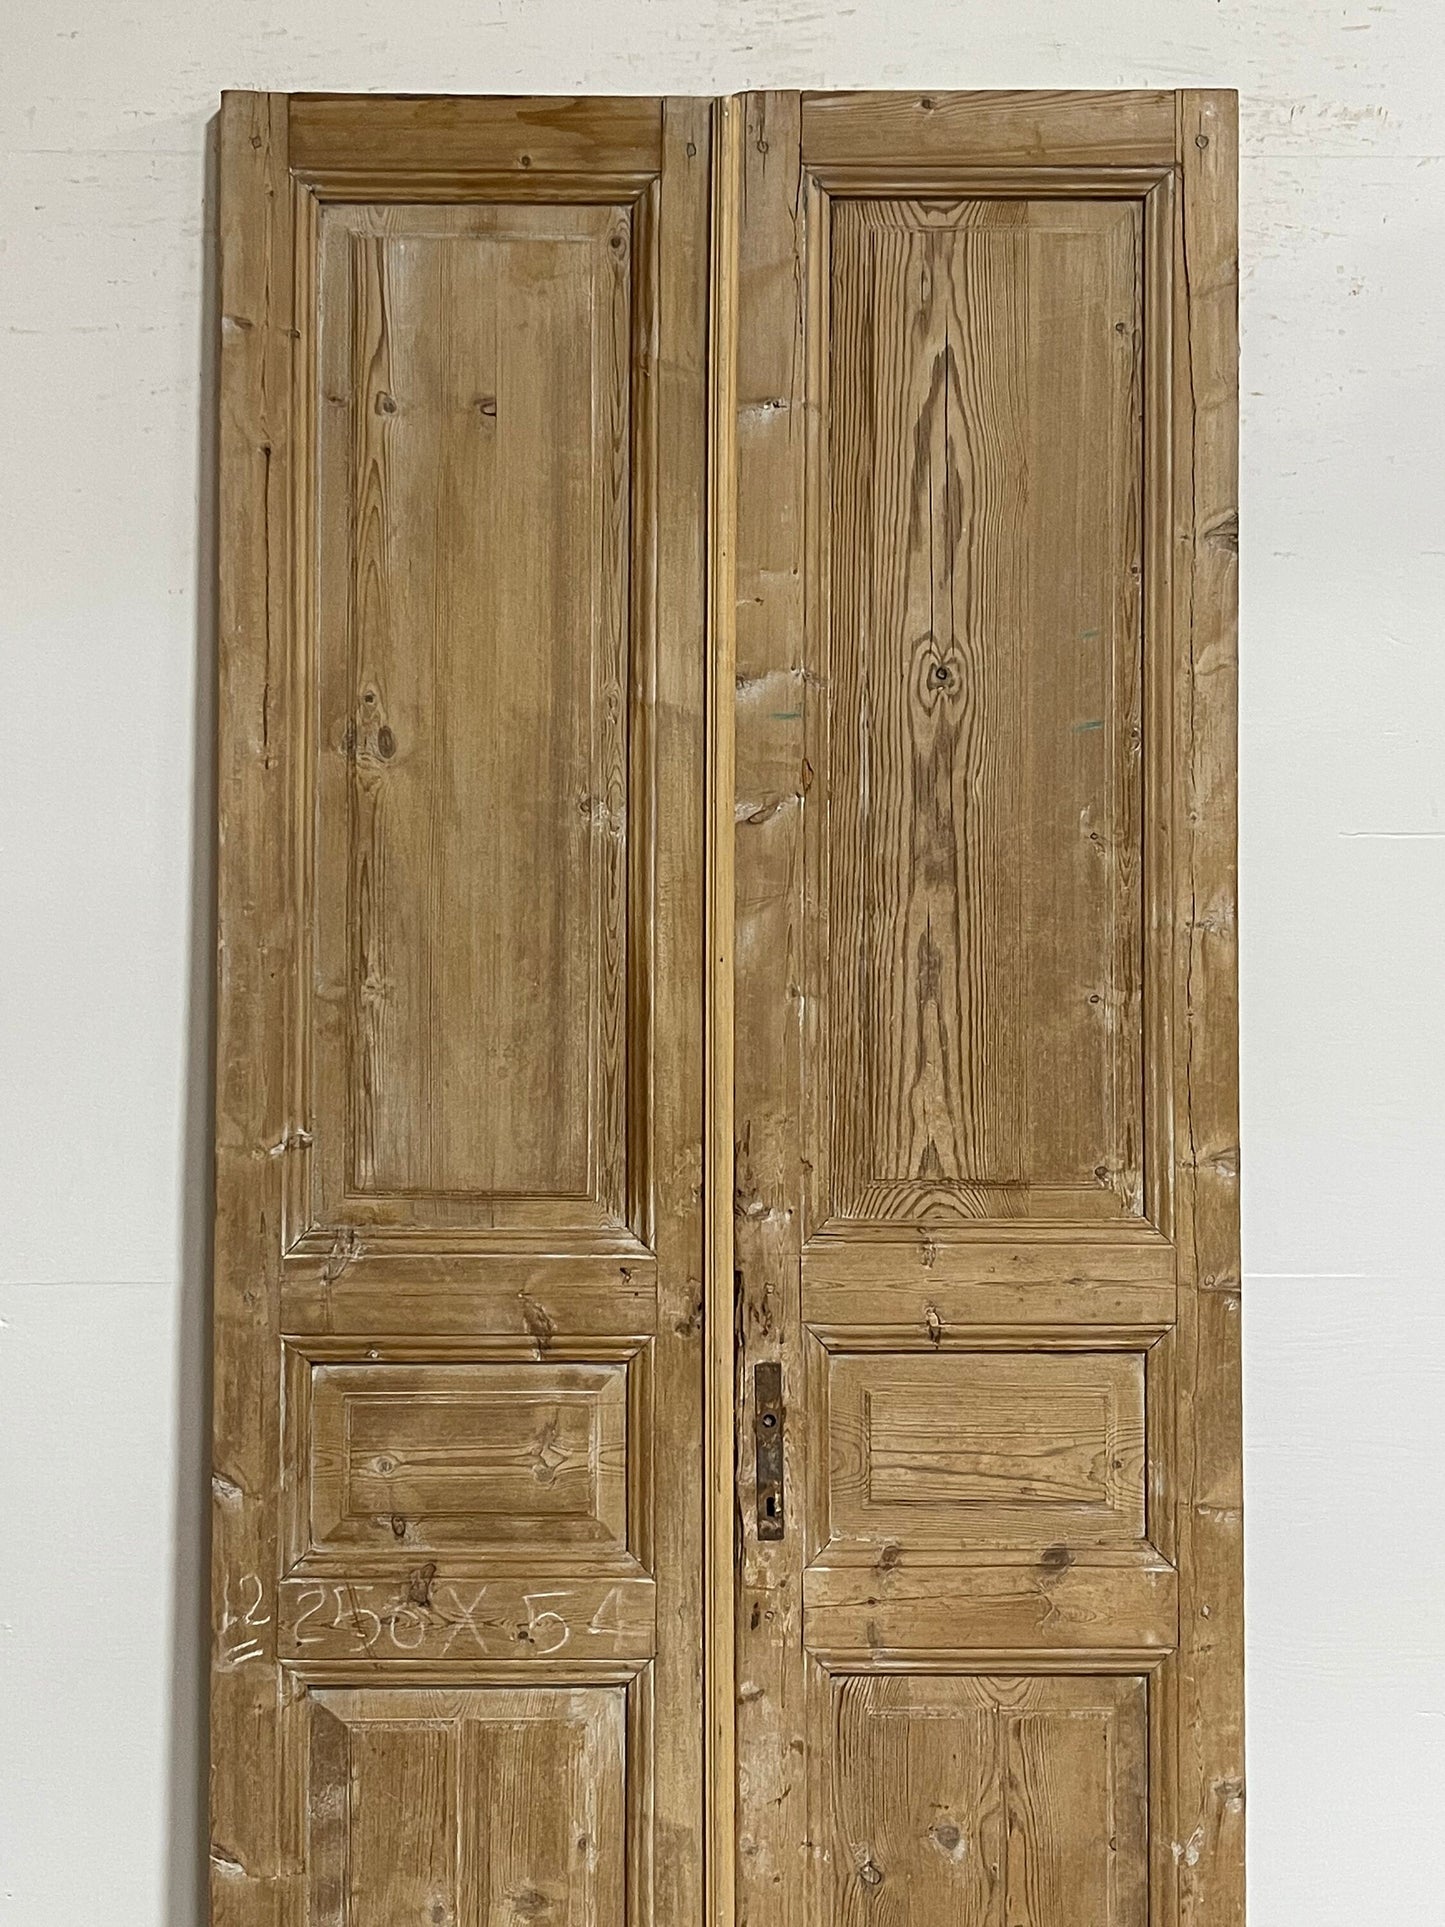 Antique French panel doors (98x42.75) G0148s